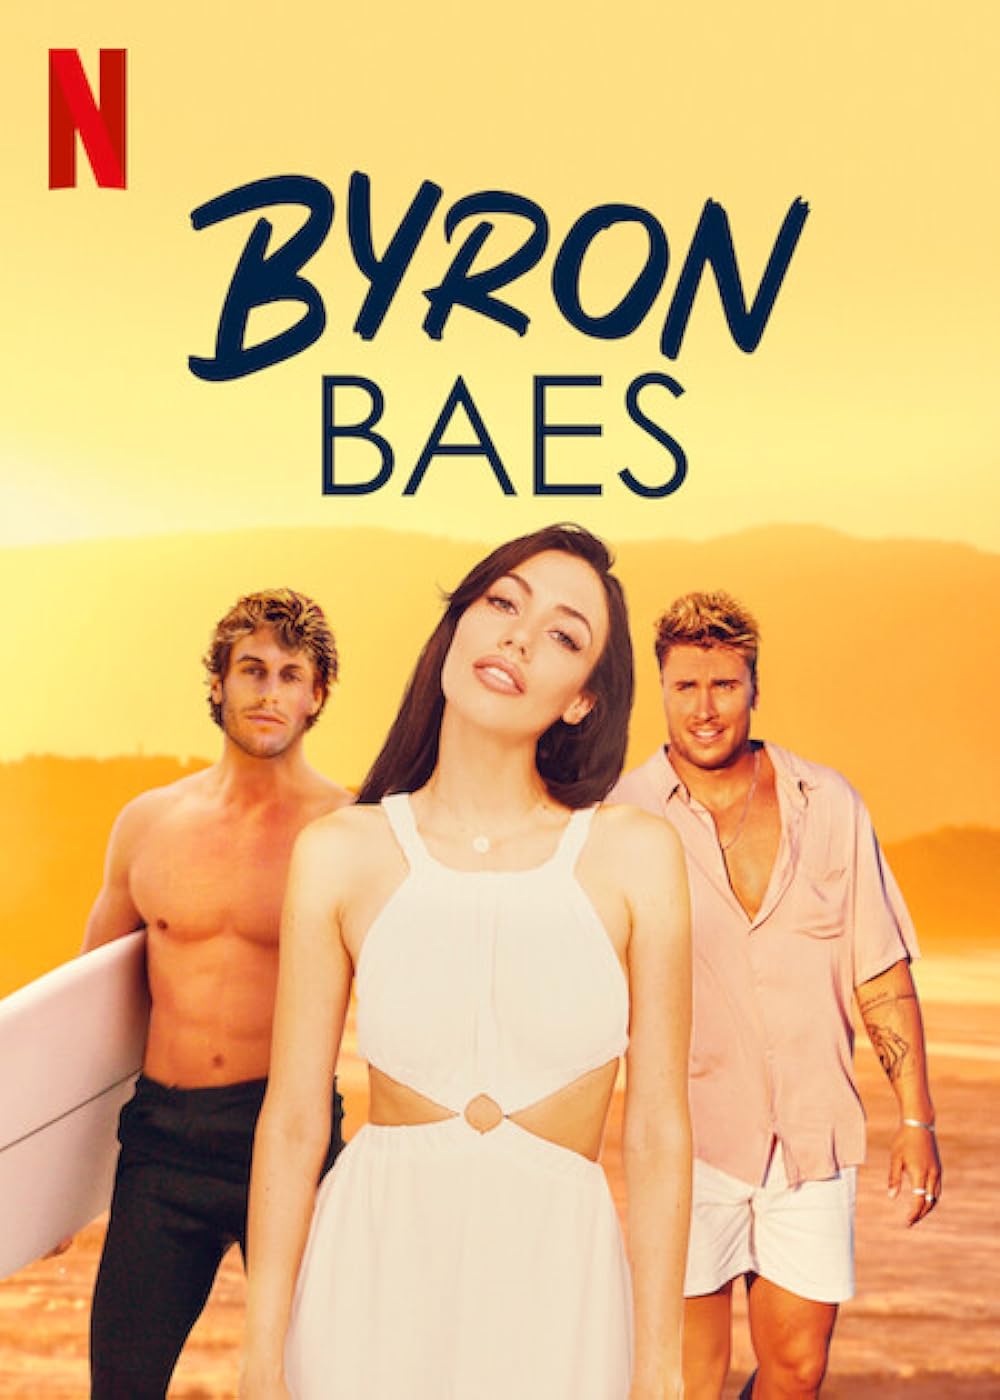 Byron Baes